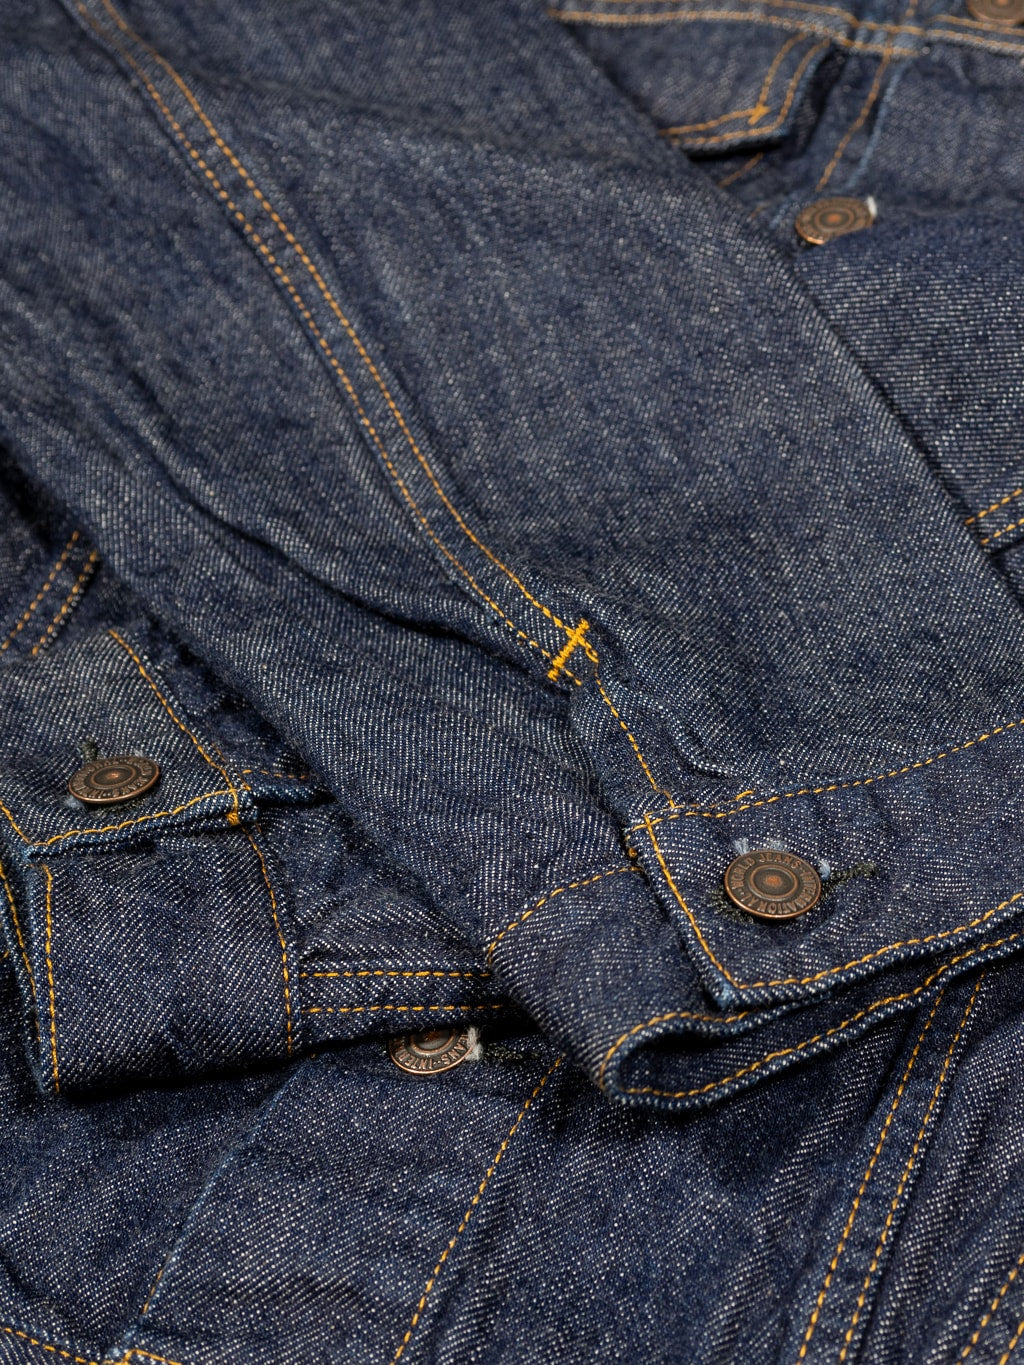 tcb jeans 60s type 3 denim jacket cuffs